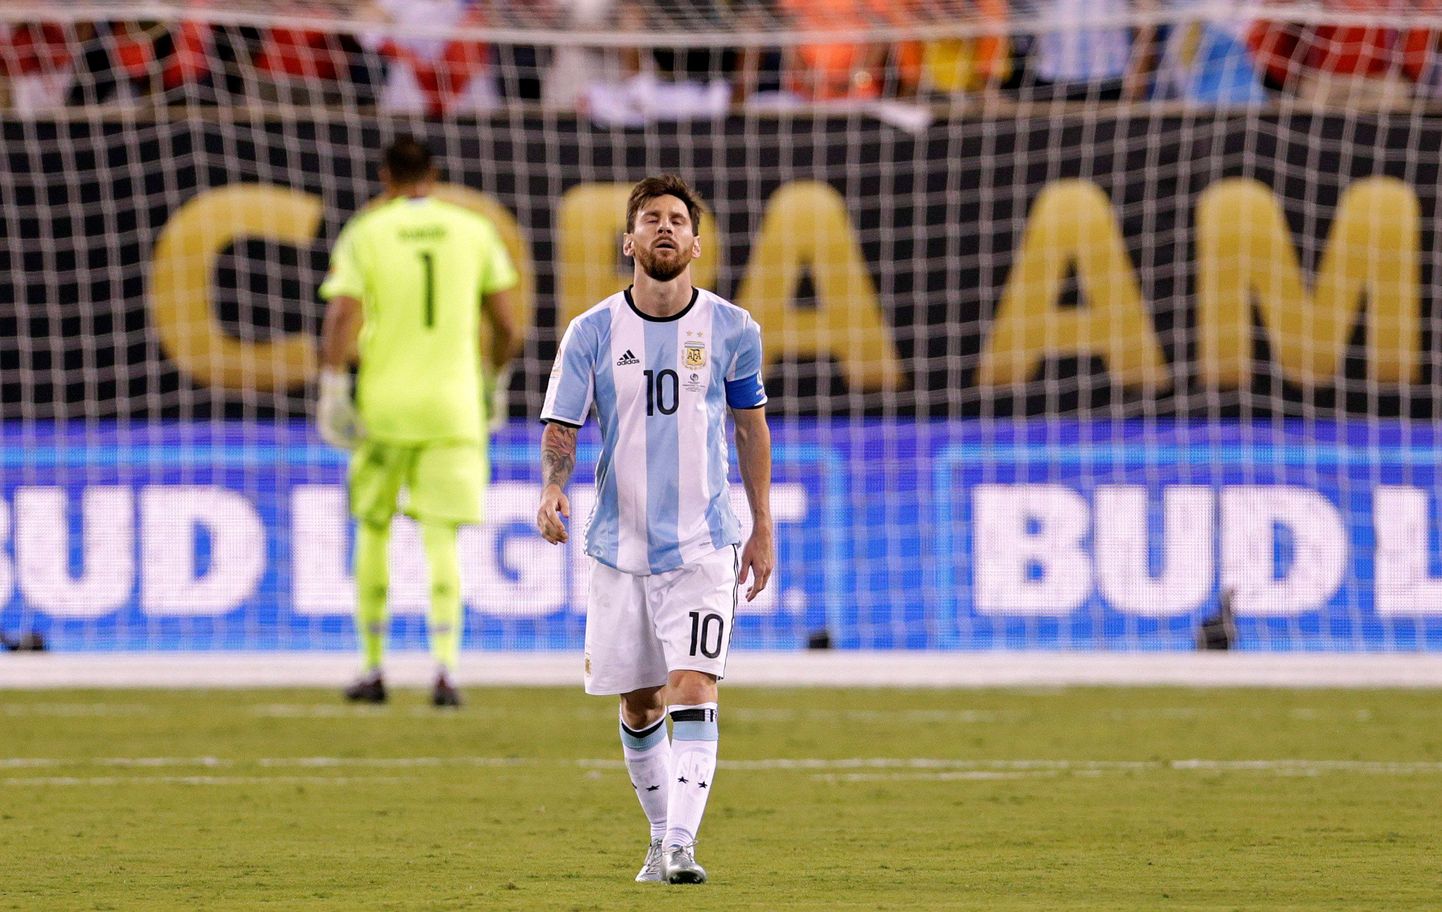 Pettunud Lionel Messi Copa America Centenario finaalis, kus jäädi alla Tšiilile.